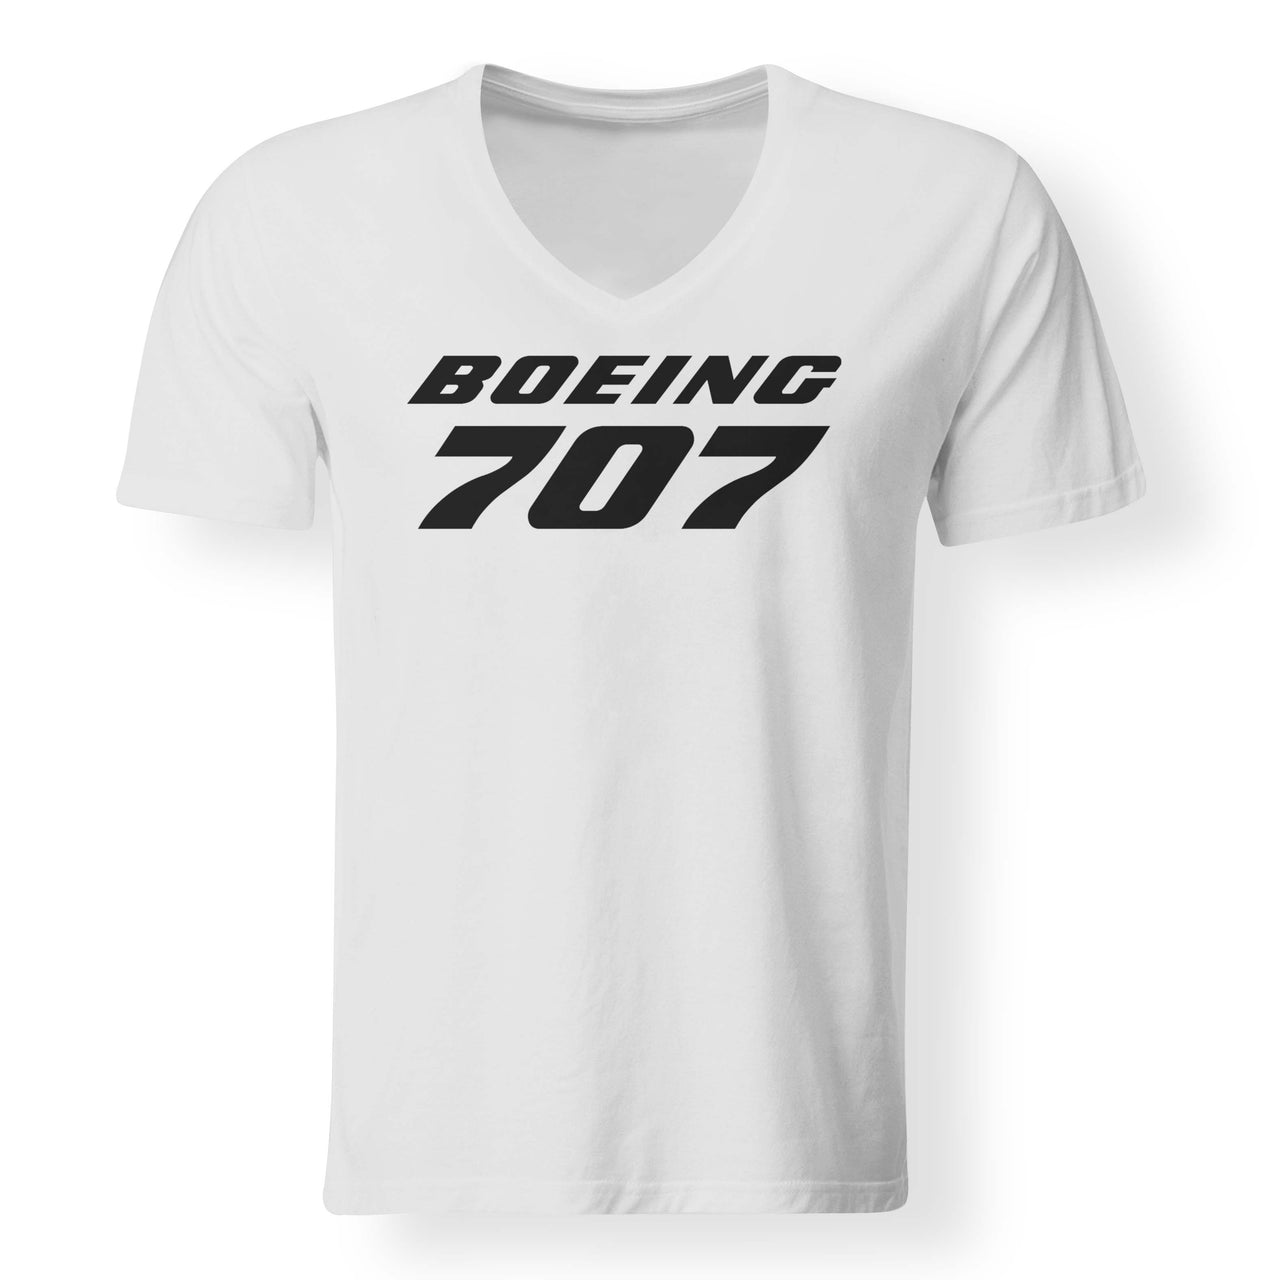 Boeing 707 & Text Designed V-Neck T-Shirts